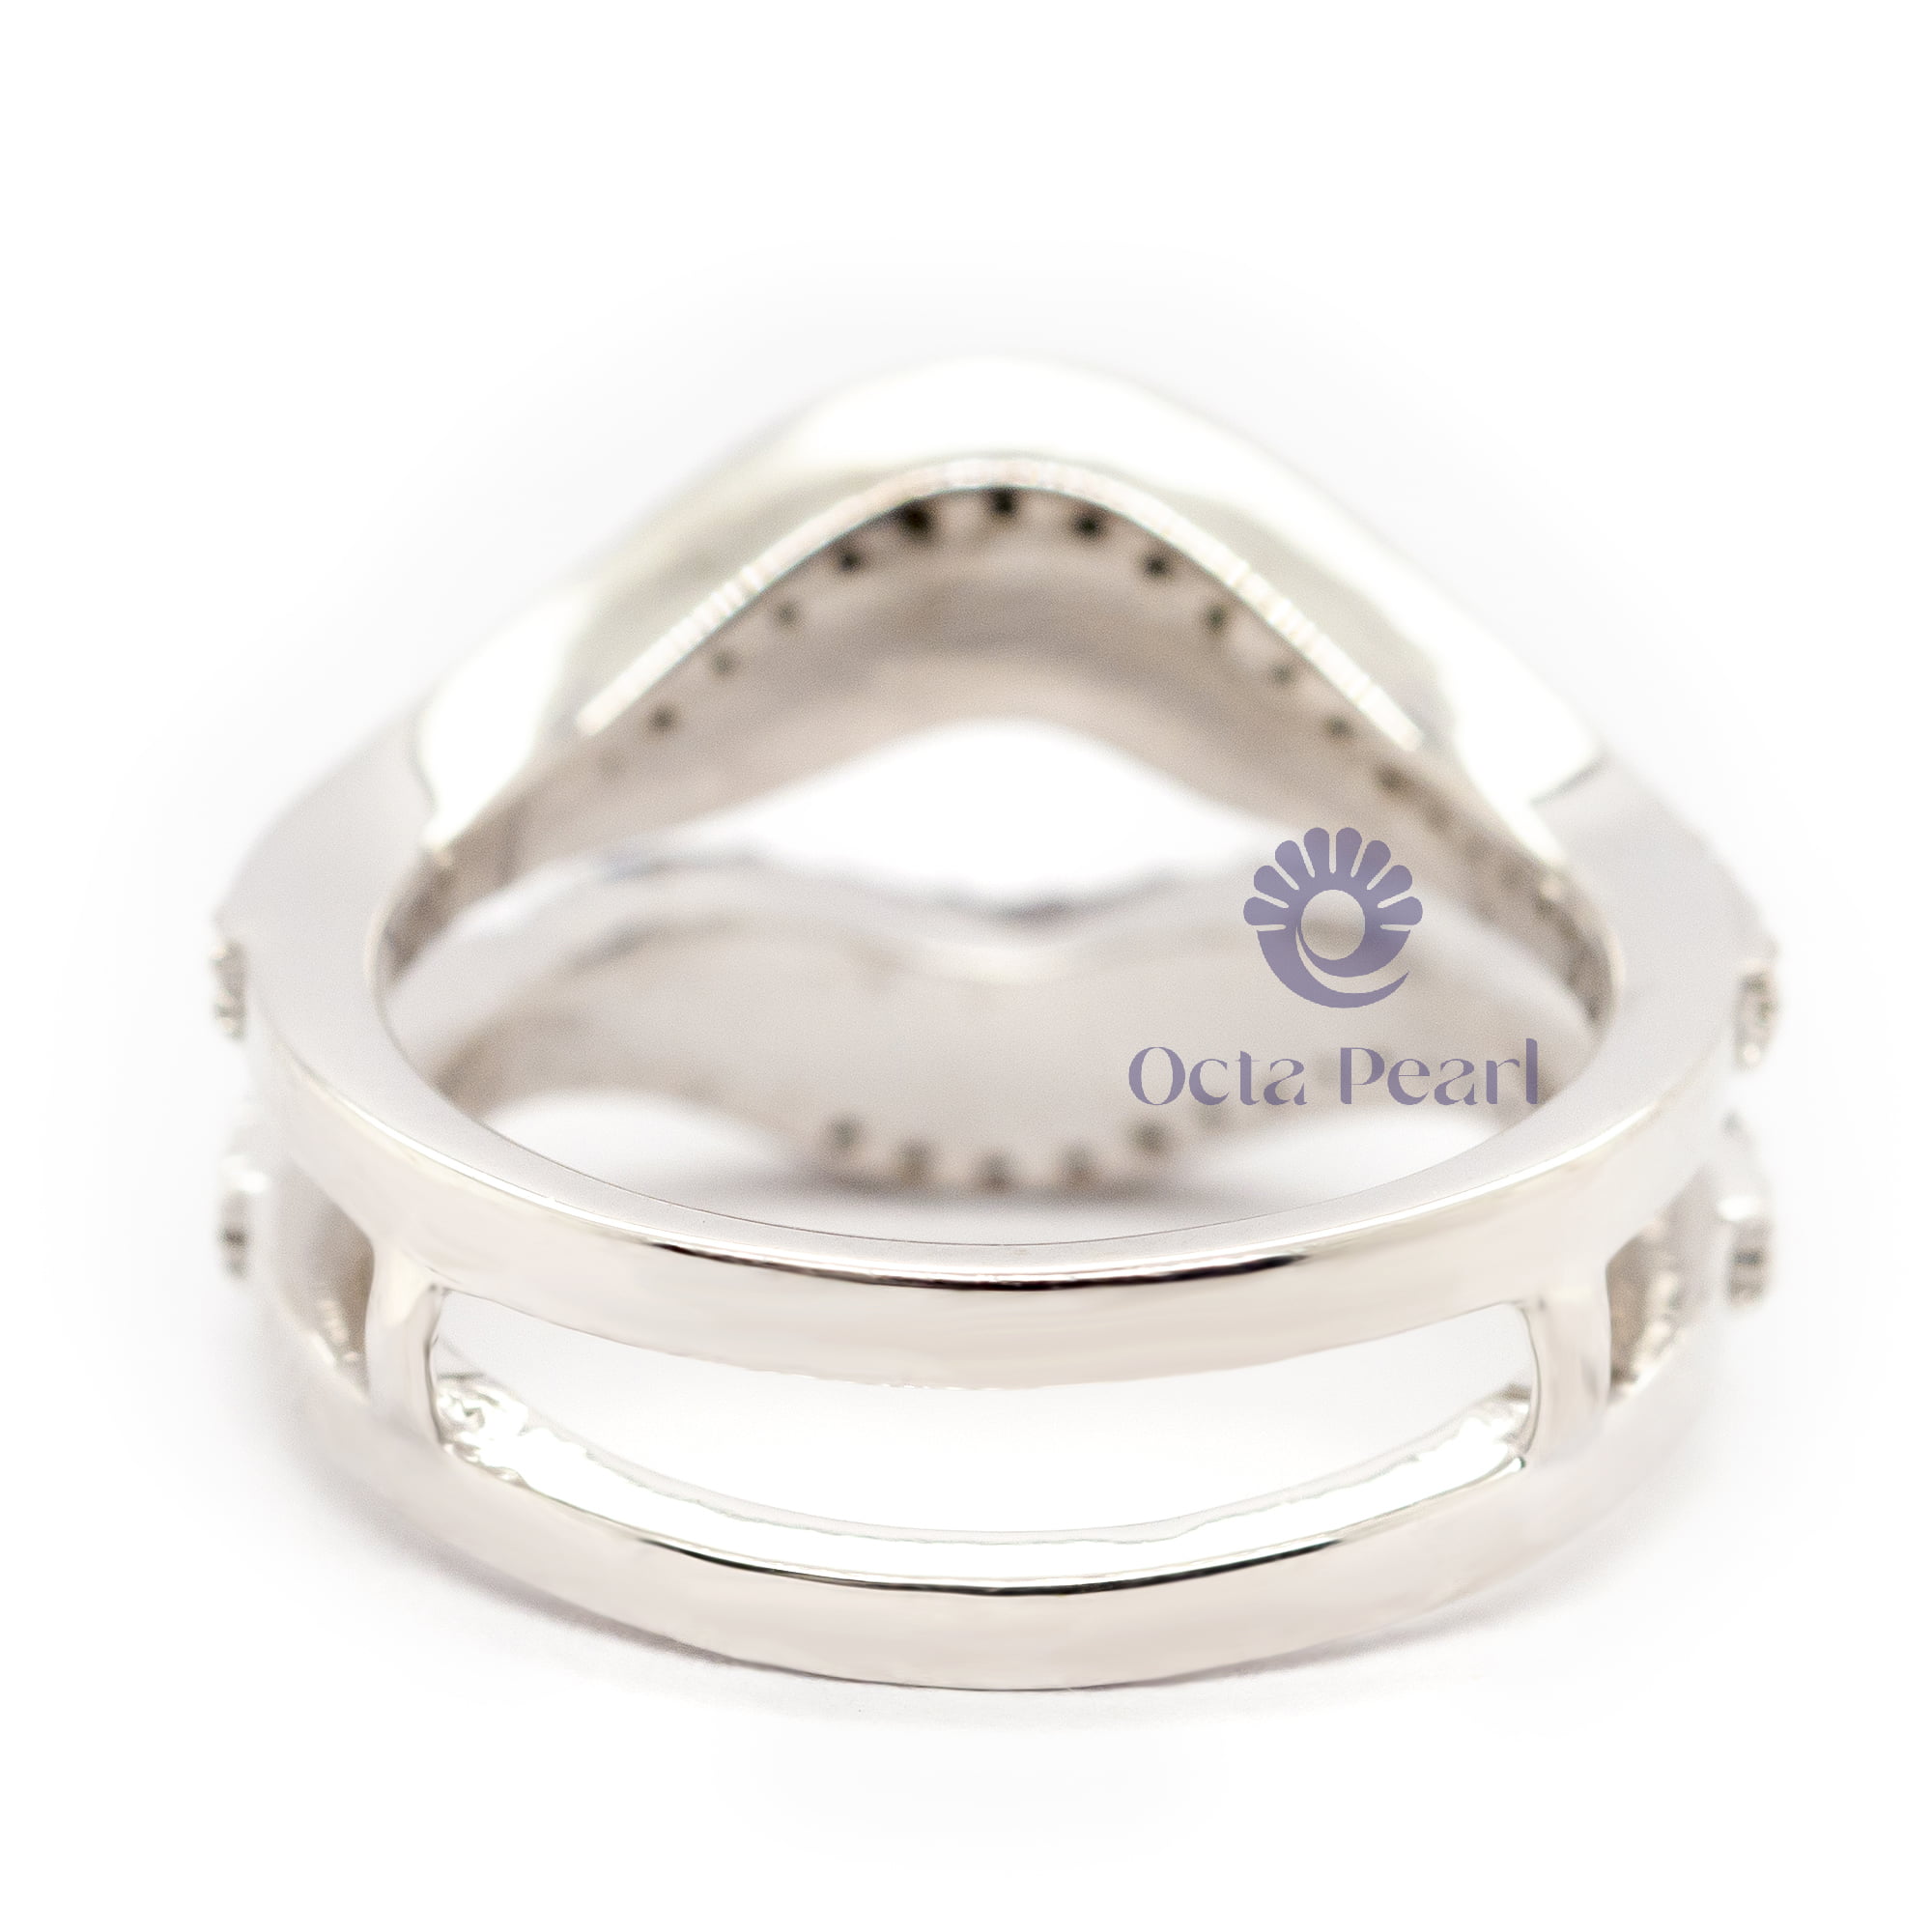 Blue sapphire & White Round CZ Stone Enhancer Guard Wedding Band Ring ( 5/8 TCW )